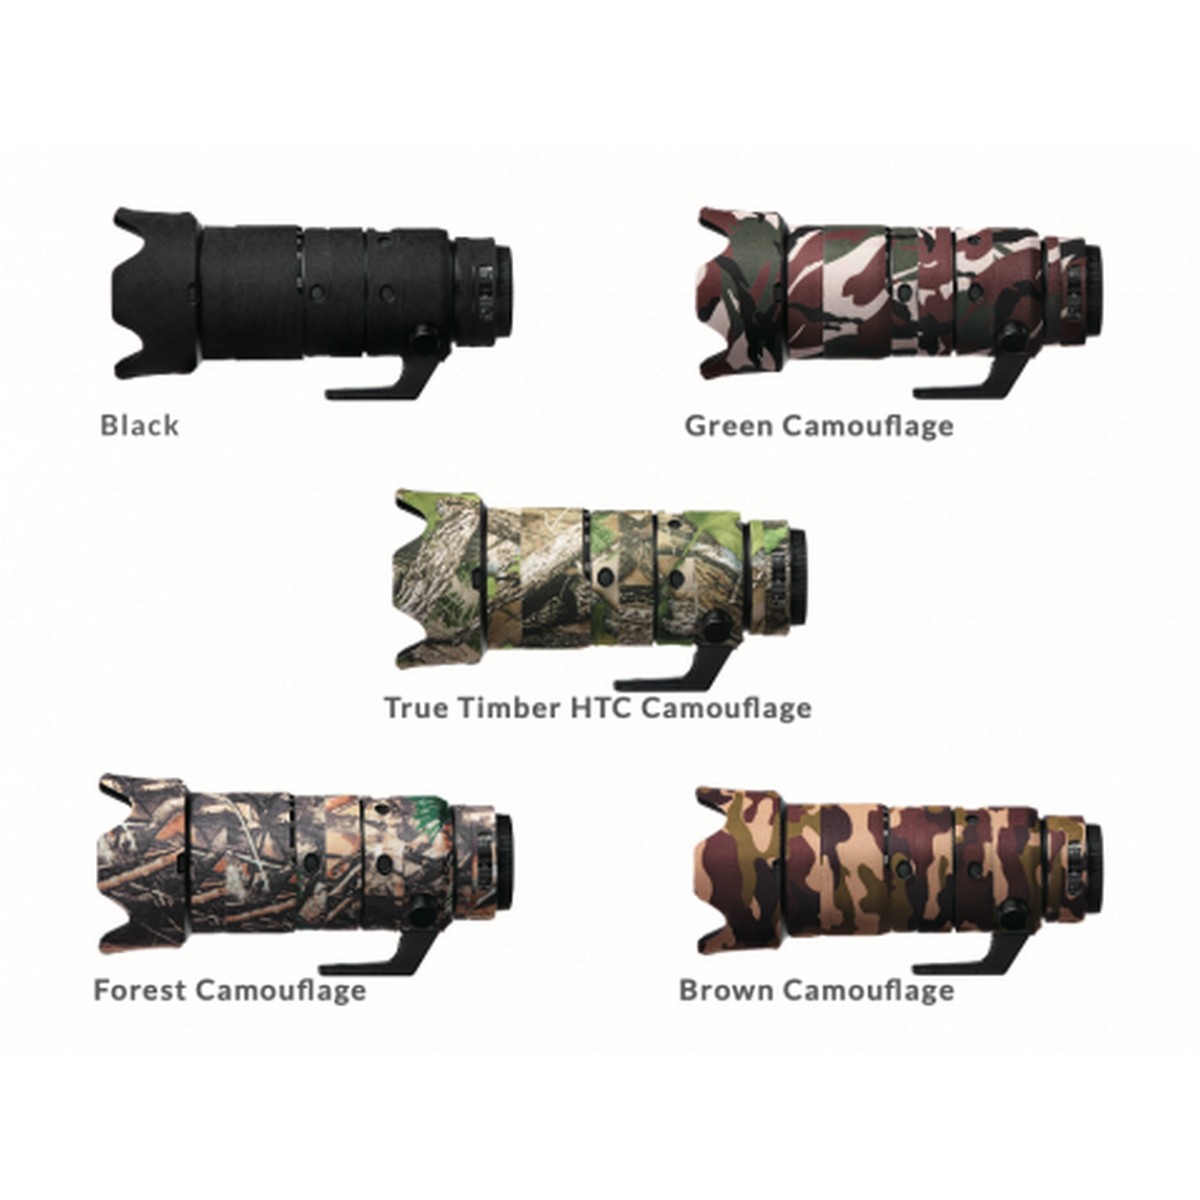 Easycover Lens Oak Objektivschutz für Nikon Z 100-400 mm 1:4.5-5.6 VR S - Wald Camouflage